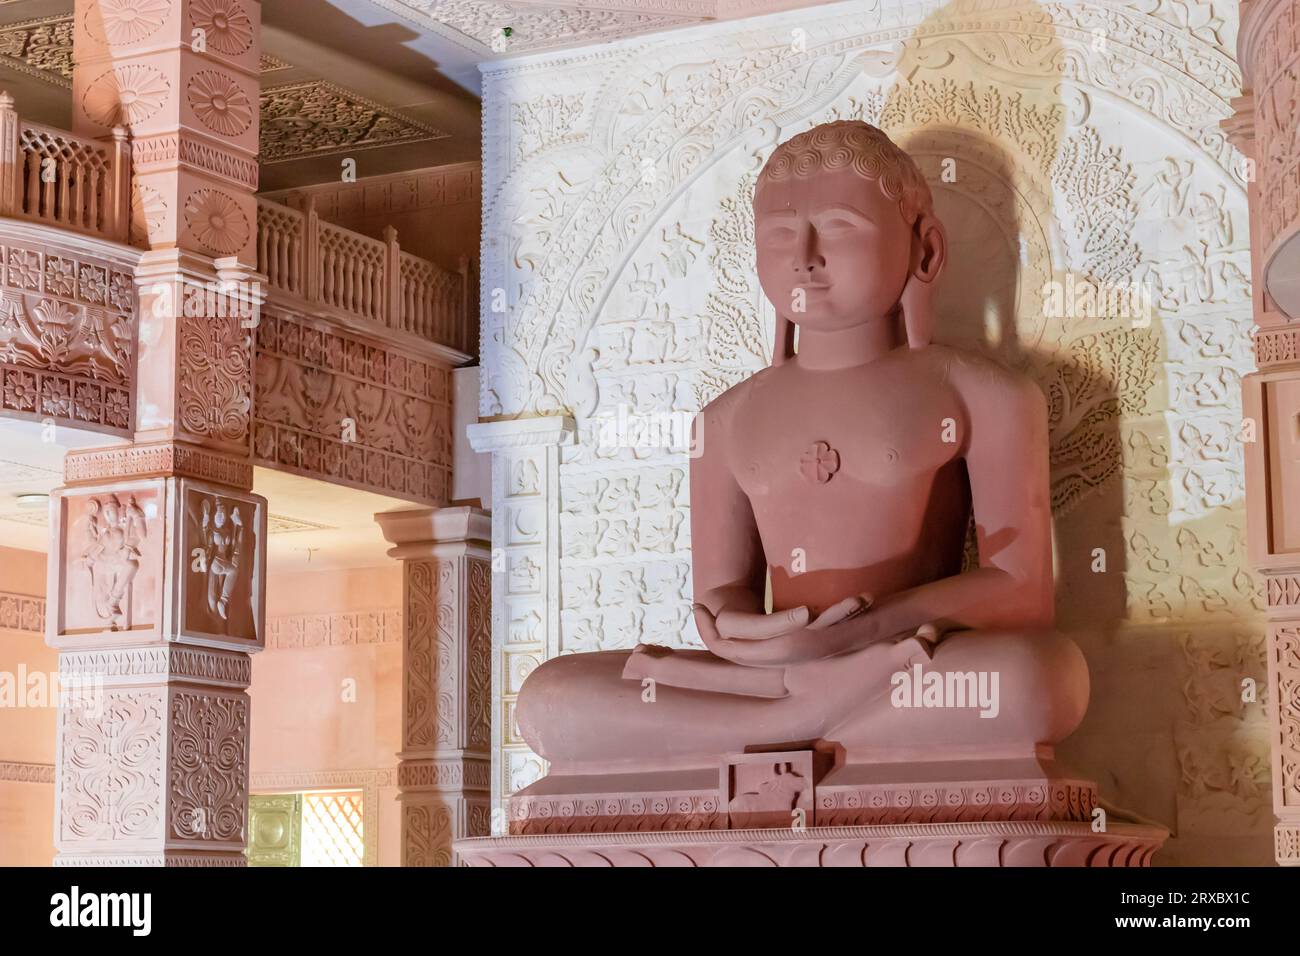 isolated red stone jain god holy statue in meditation from different angle image is taken at Shri Digamber Jain Gyanoday Tirth Kshetra, Nareli Jain Ma Stock Photo